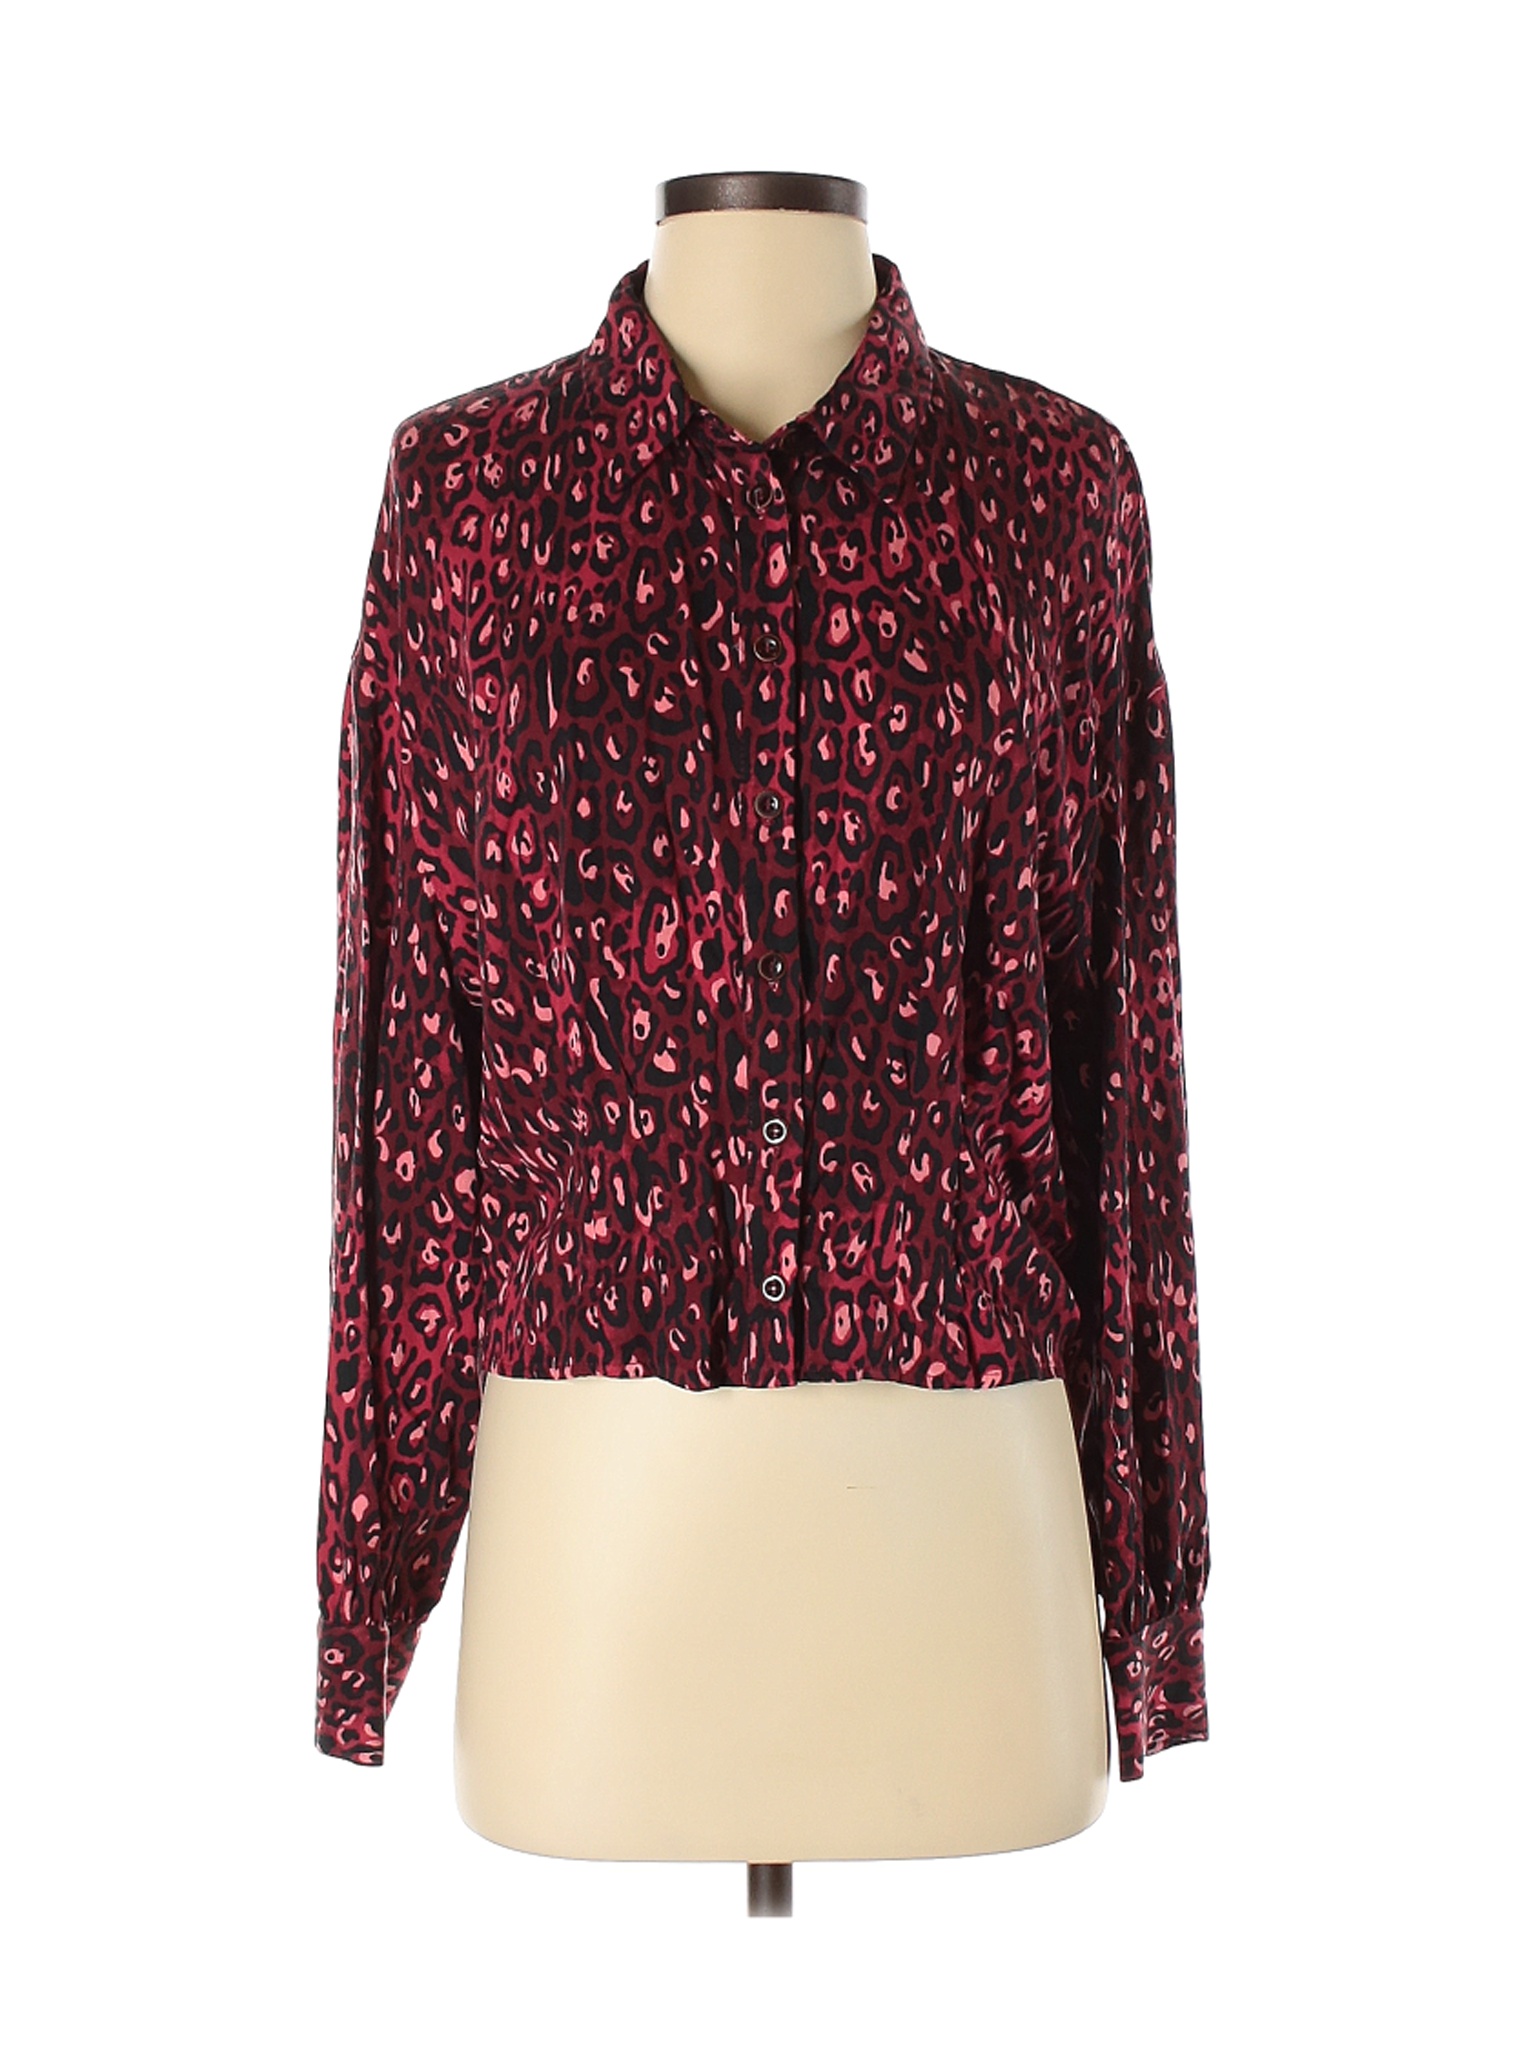 Zara TRF Women Red Long Sleeve Button-Down Shirt M | eBay